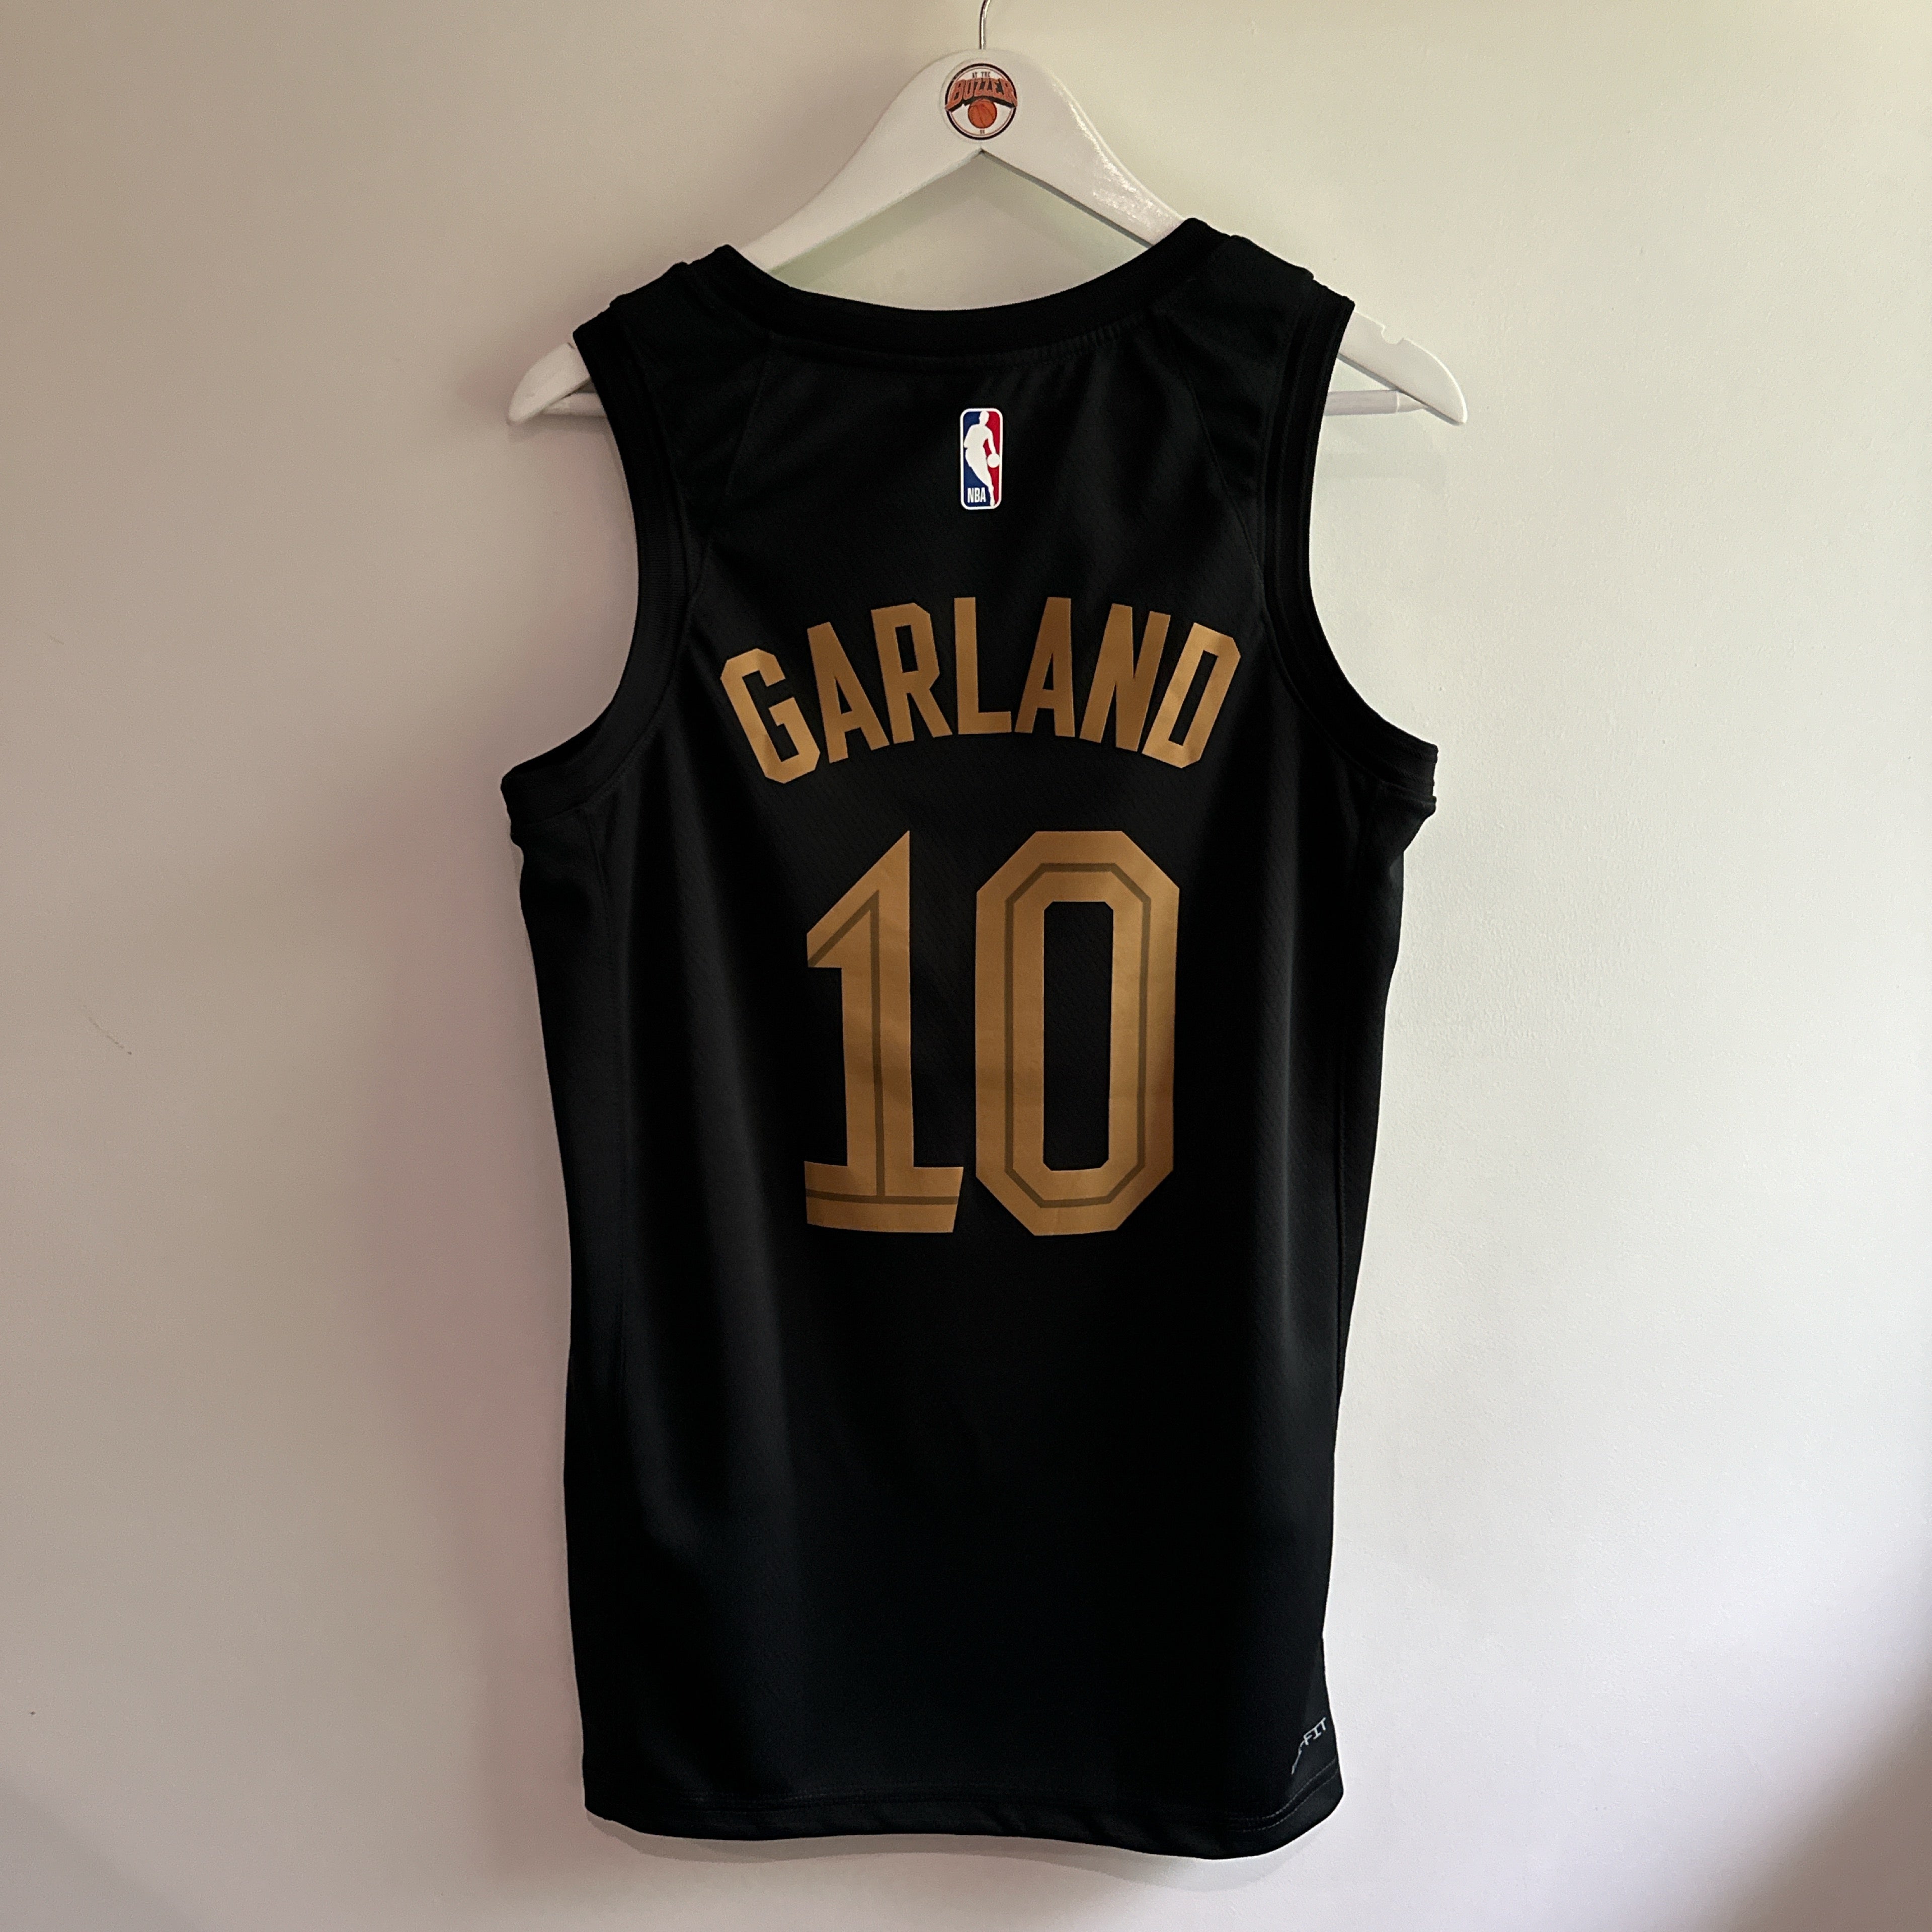 Cleveland Cavaliers Darius Garland Jordan jersey - Medium